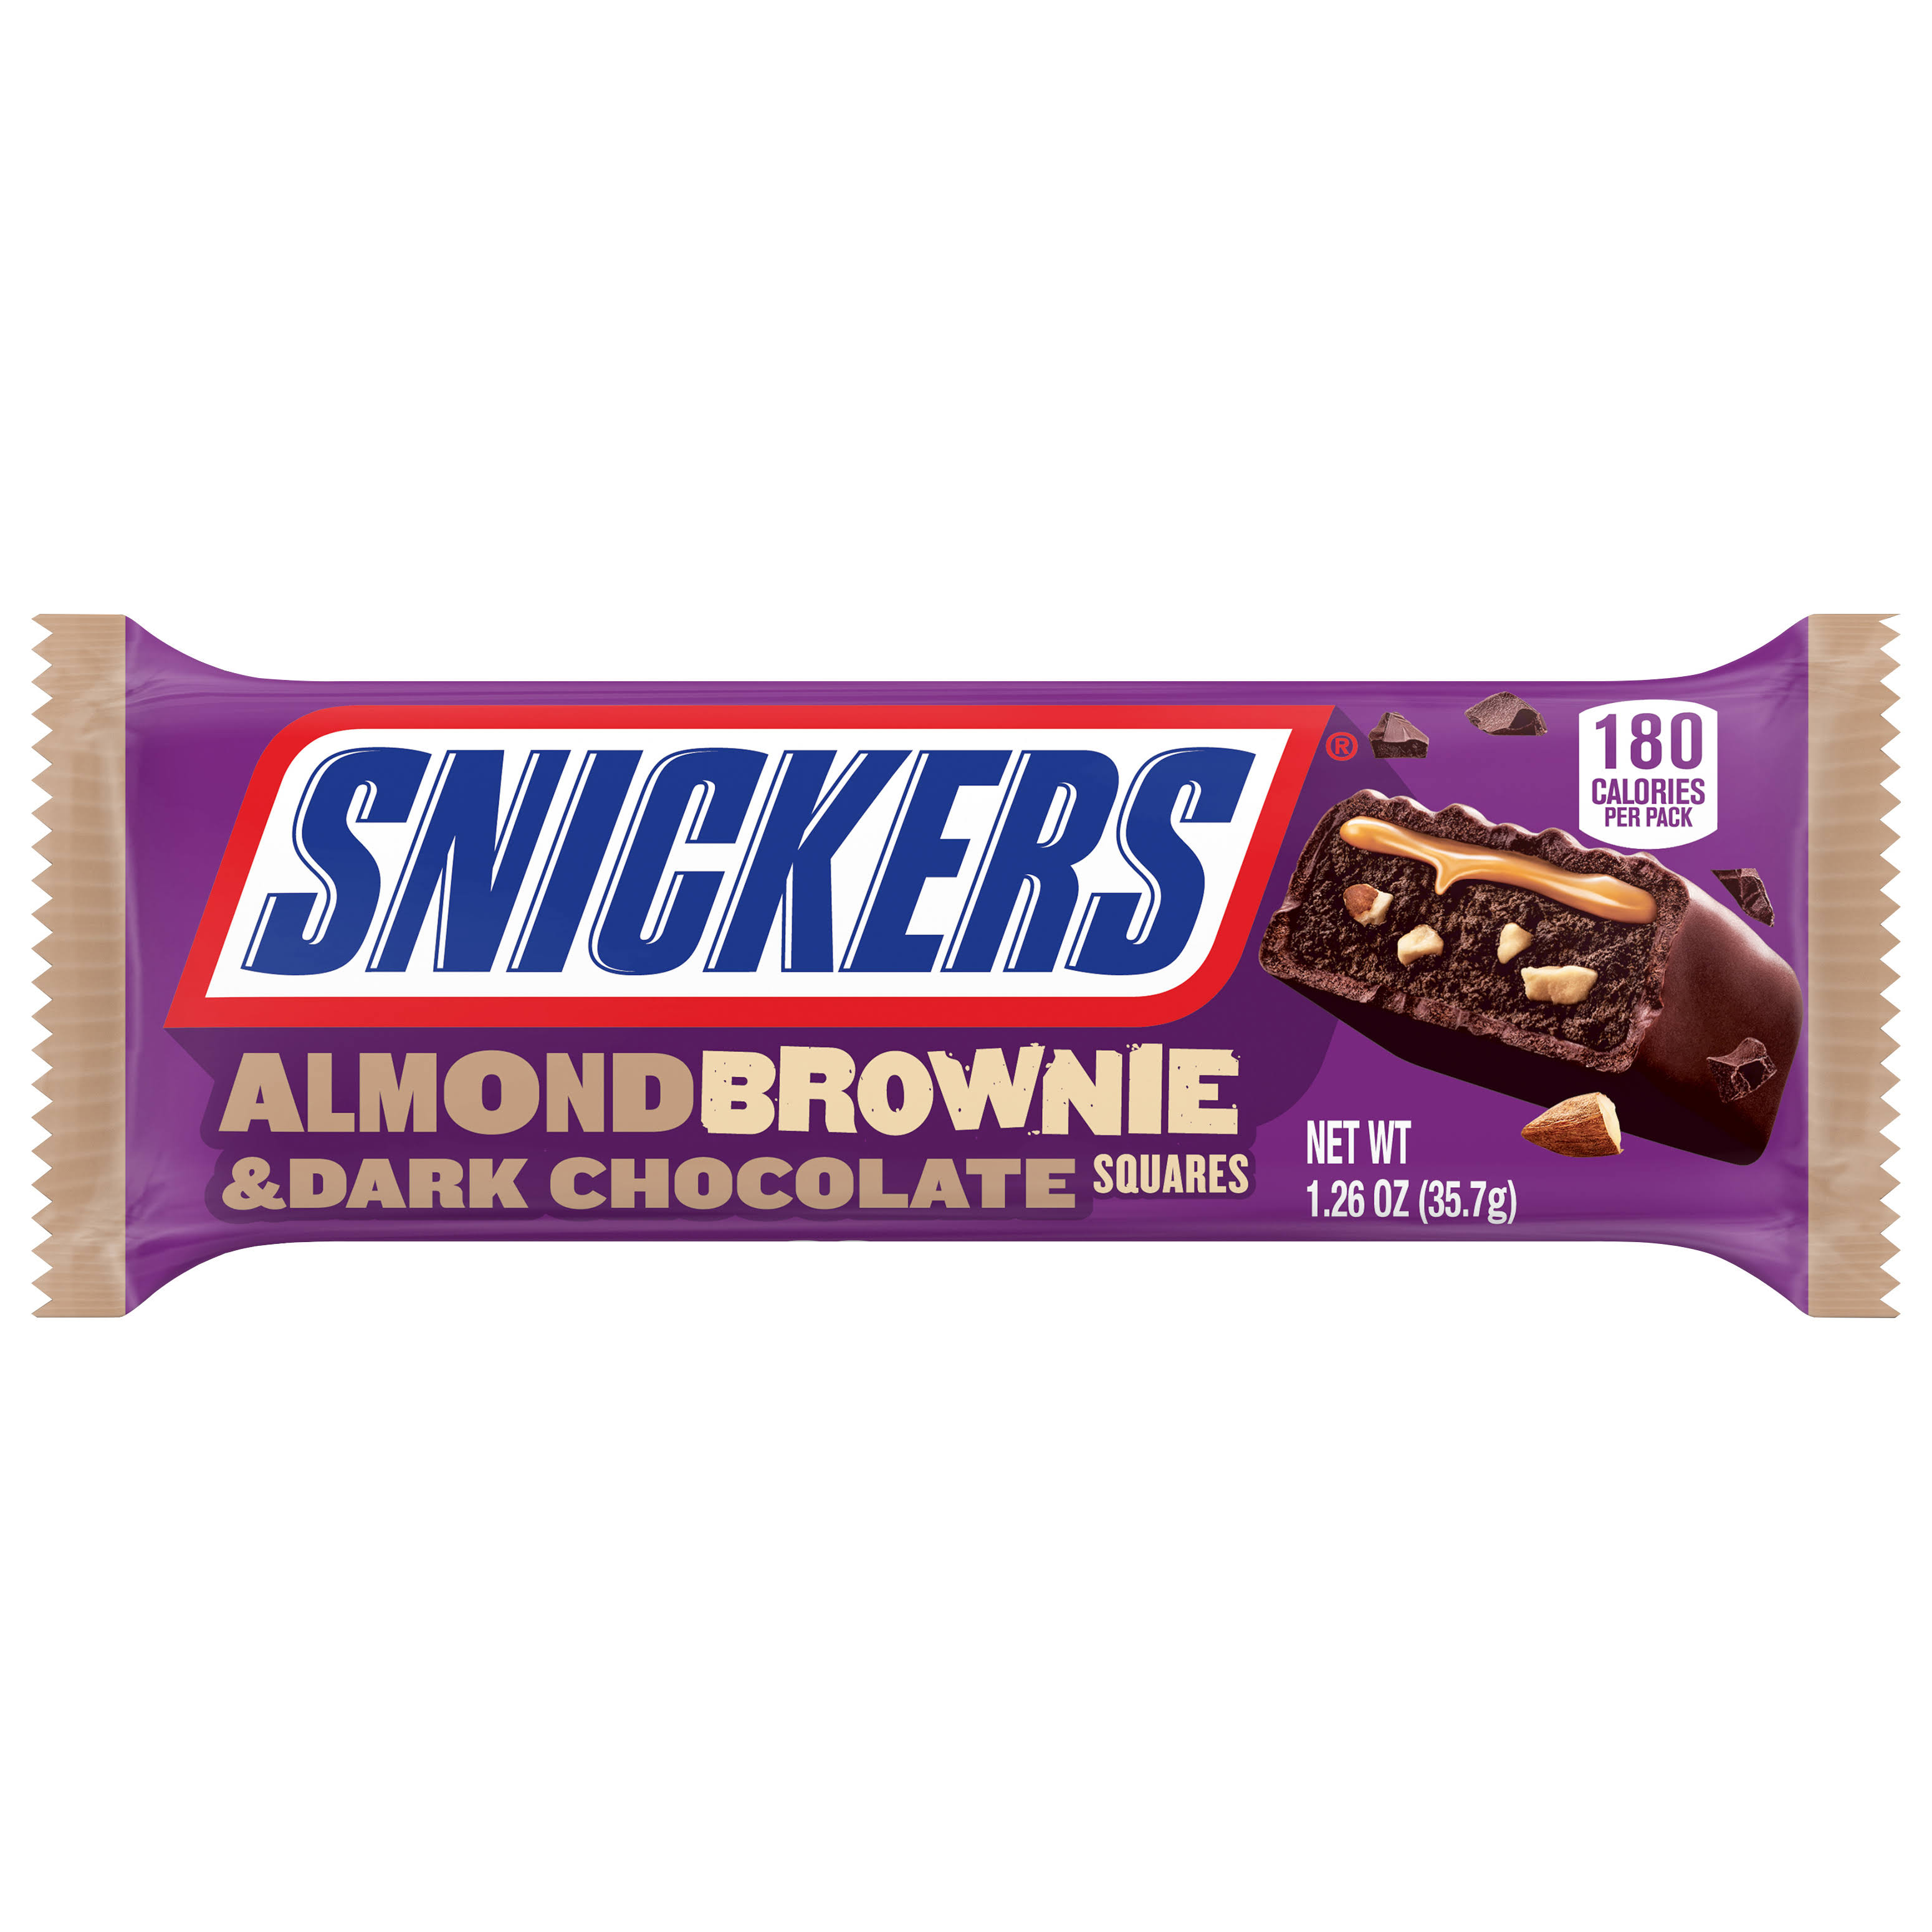 Snickers dark chocolate almond brownie square candy bar, 1.2 oz